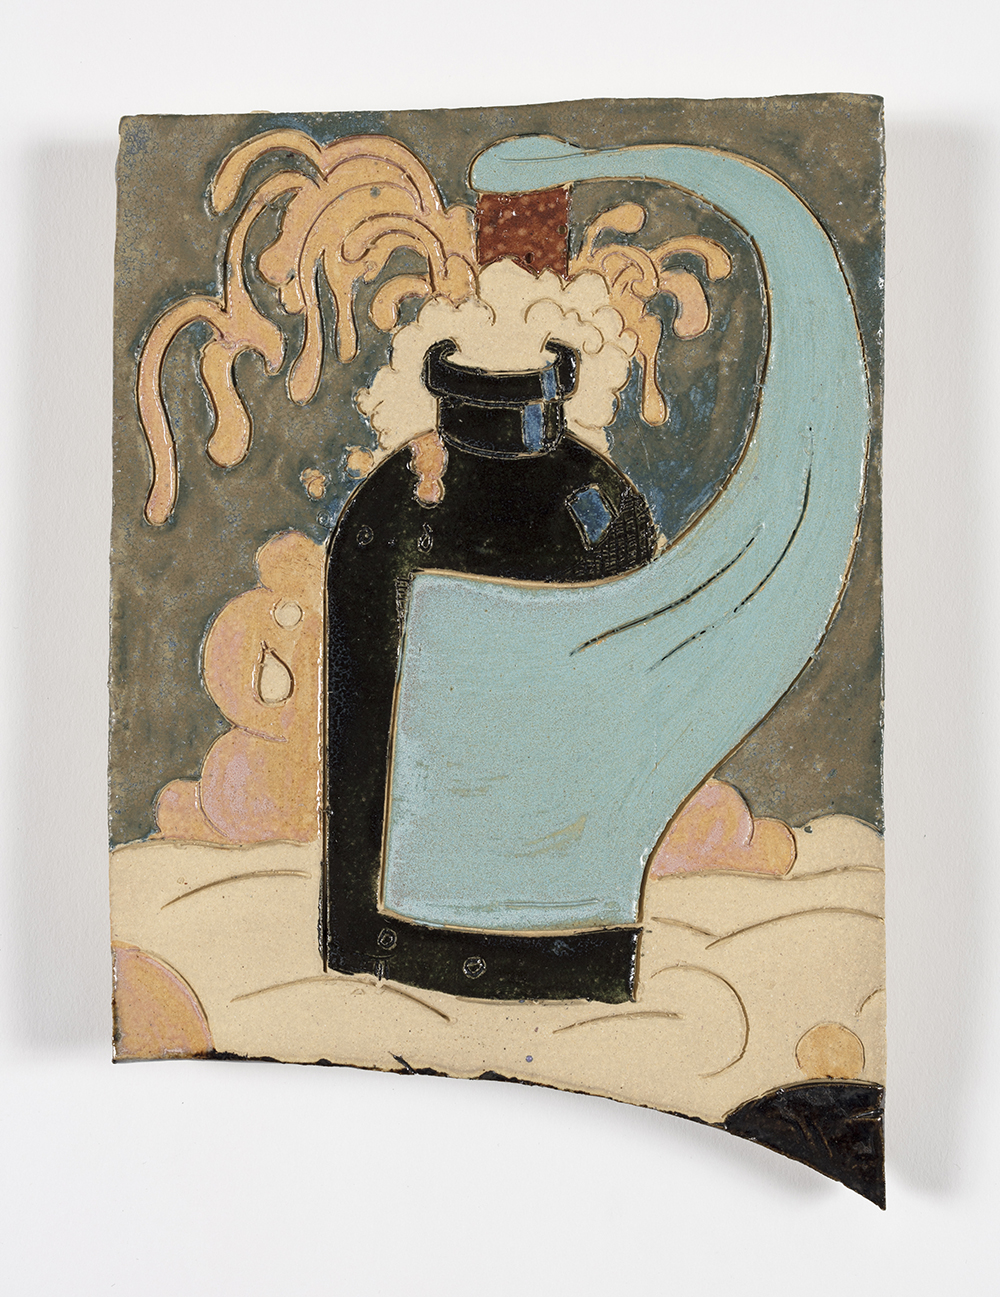 Kevin McNamee-Tweed.<em> Pop<em>, 2018. Glazed ceramic, 8 1/4 x 5 3/4 inches (21 x 14.6 cm)